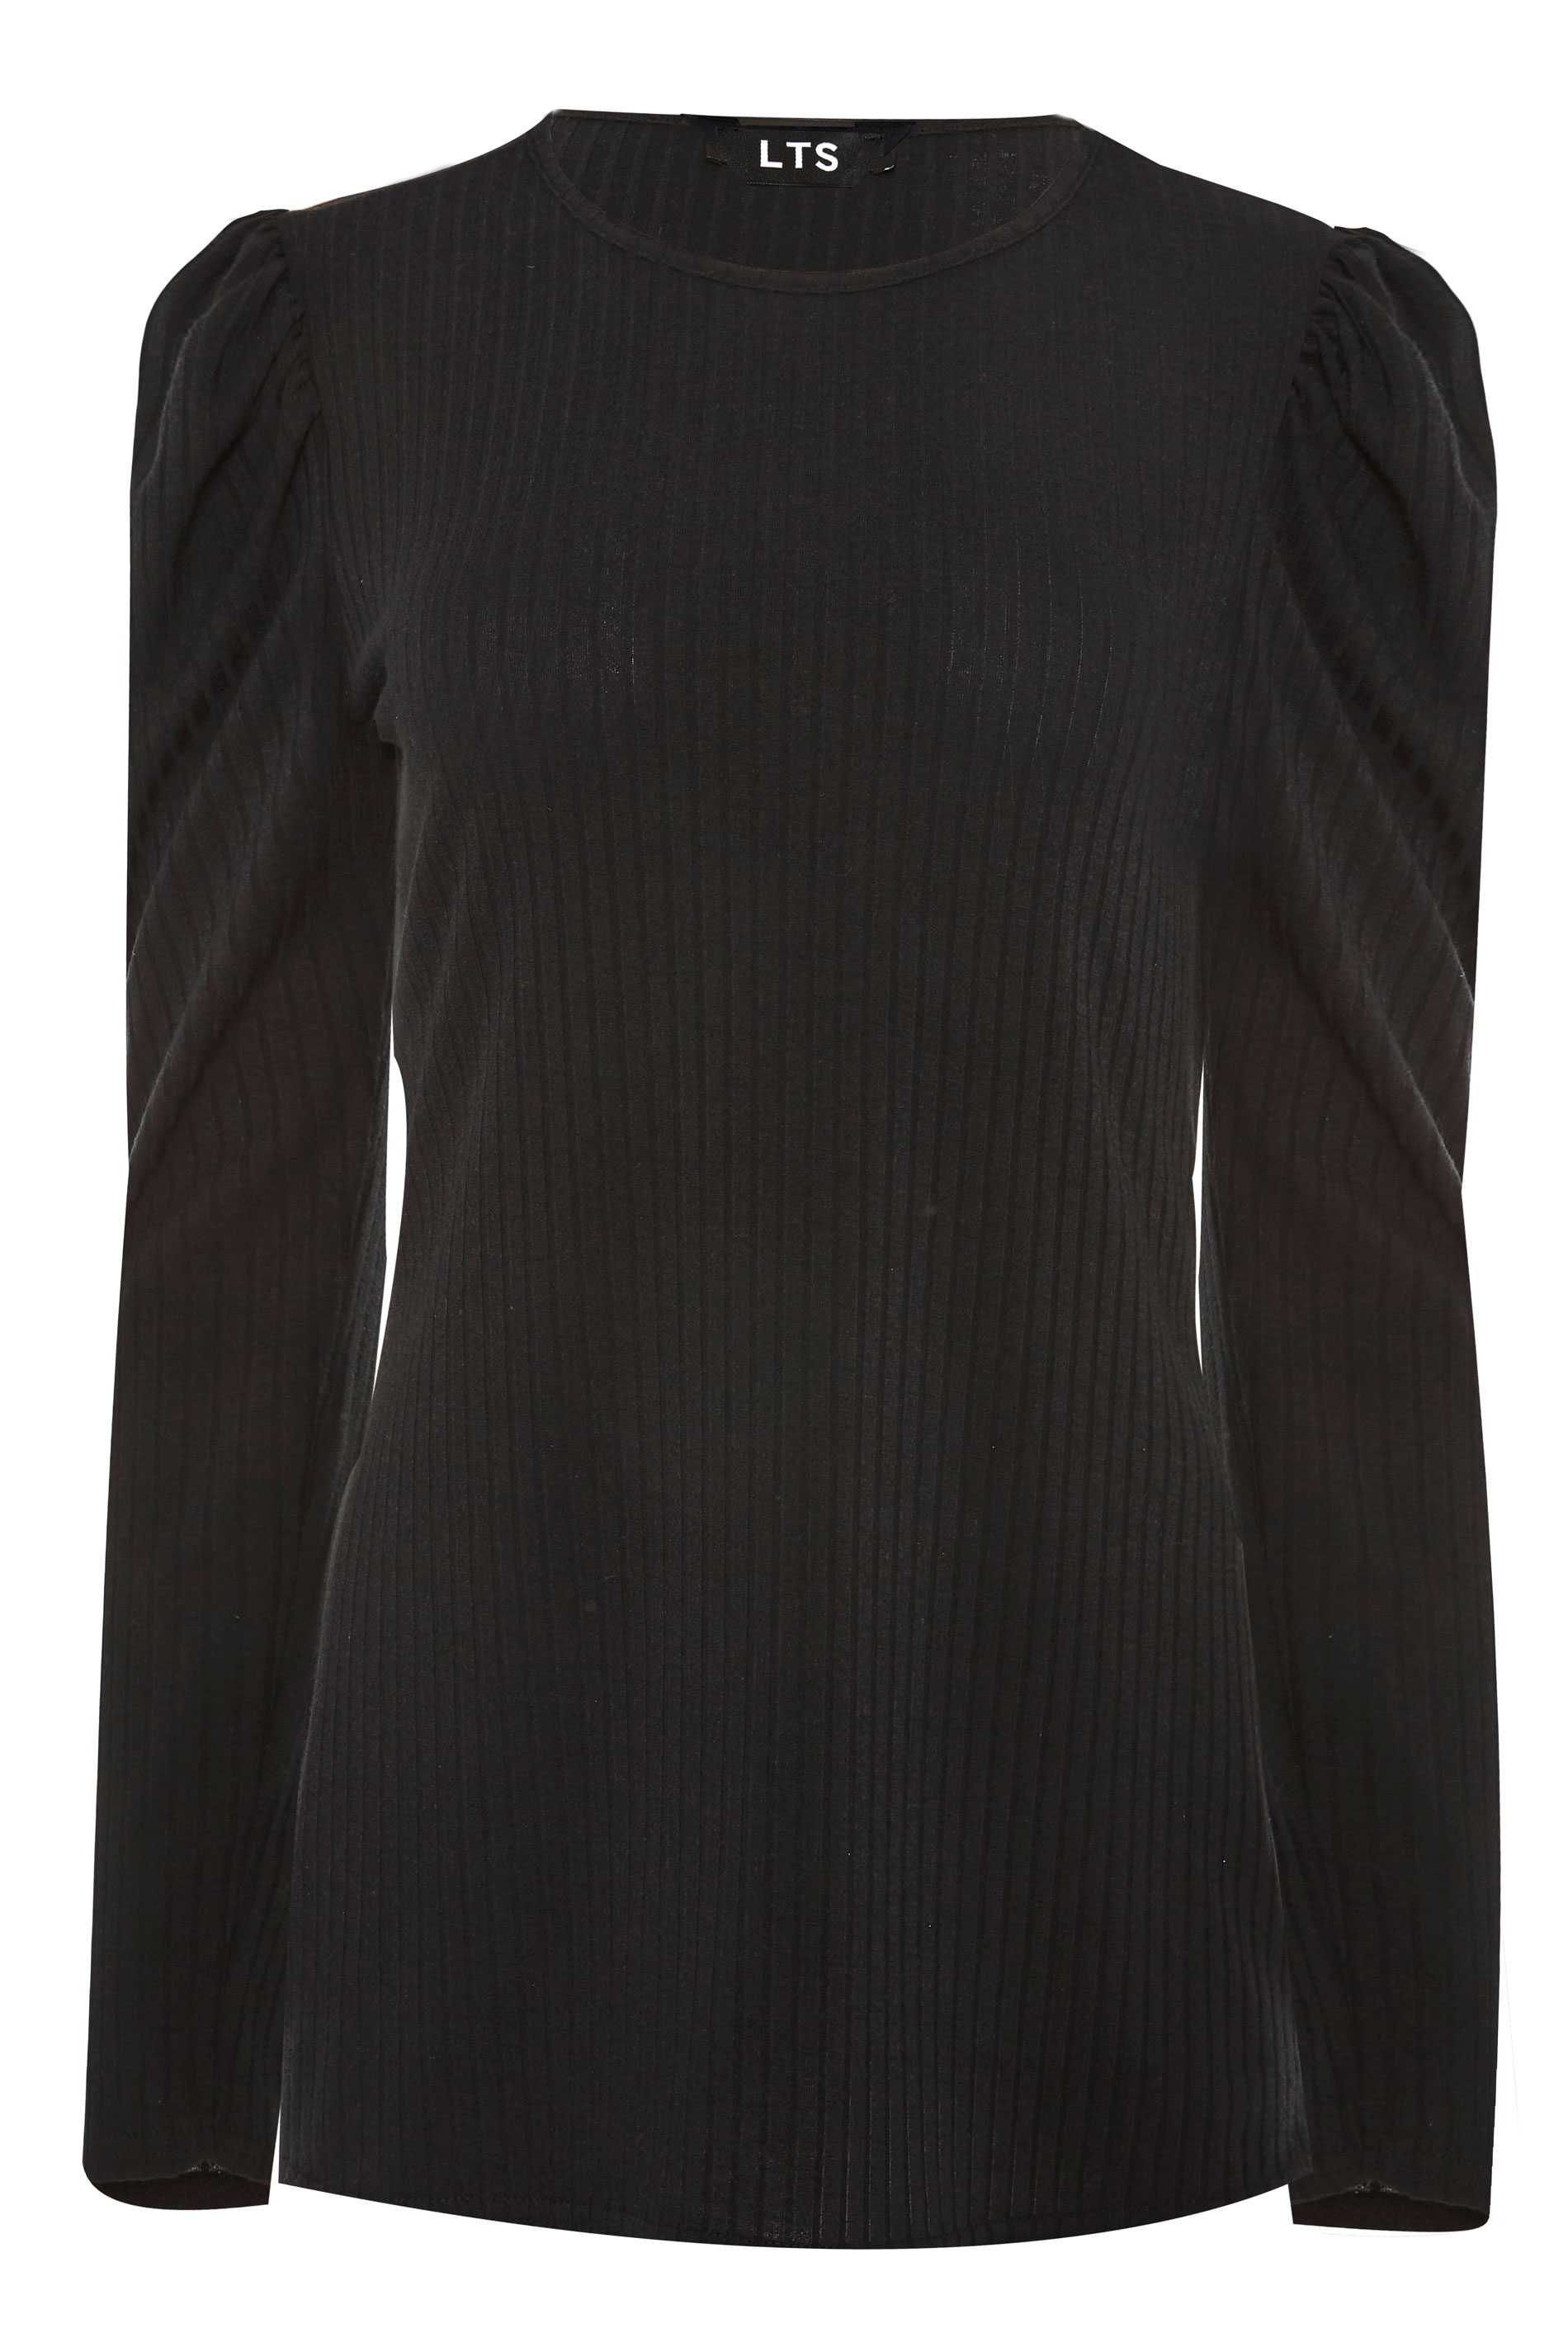 Tall Women's LTS Black Ribbed Puff Sleeve Top | Long Tall Sally